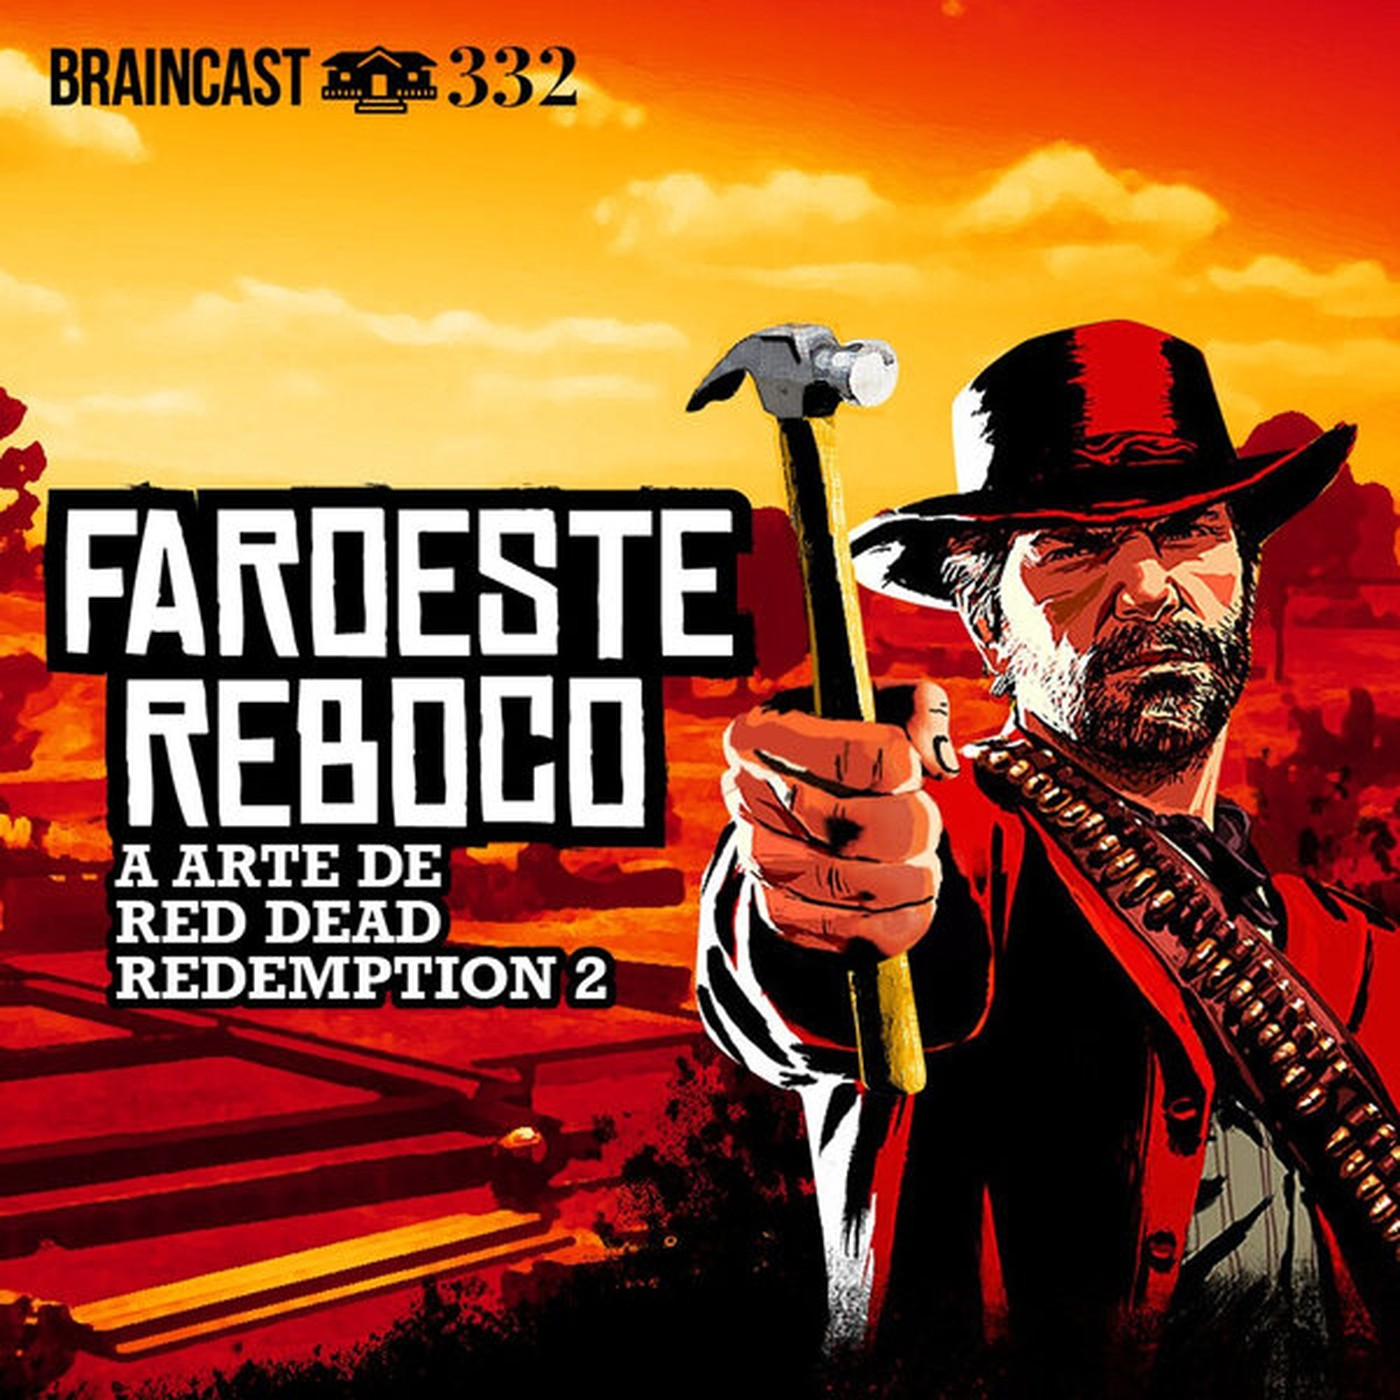 Faroeste 'Red Dead Redemption 2' deve ganhar versão para PC - Olhar Digital